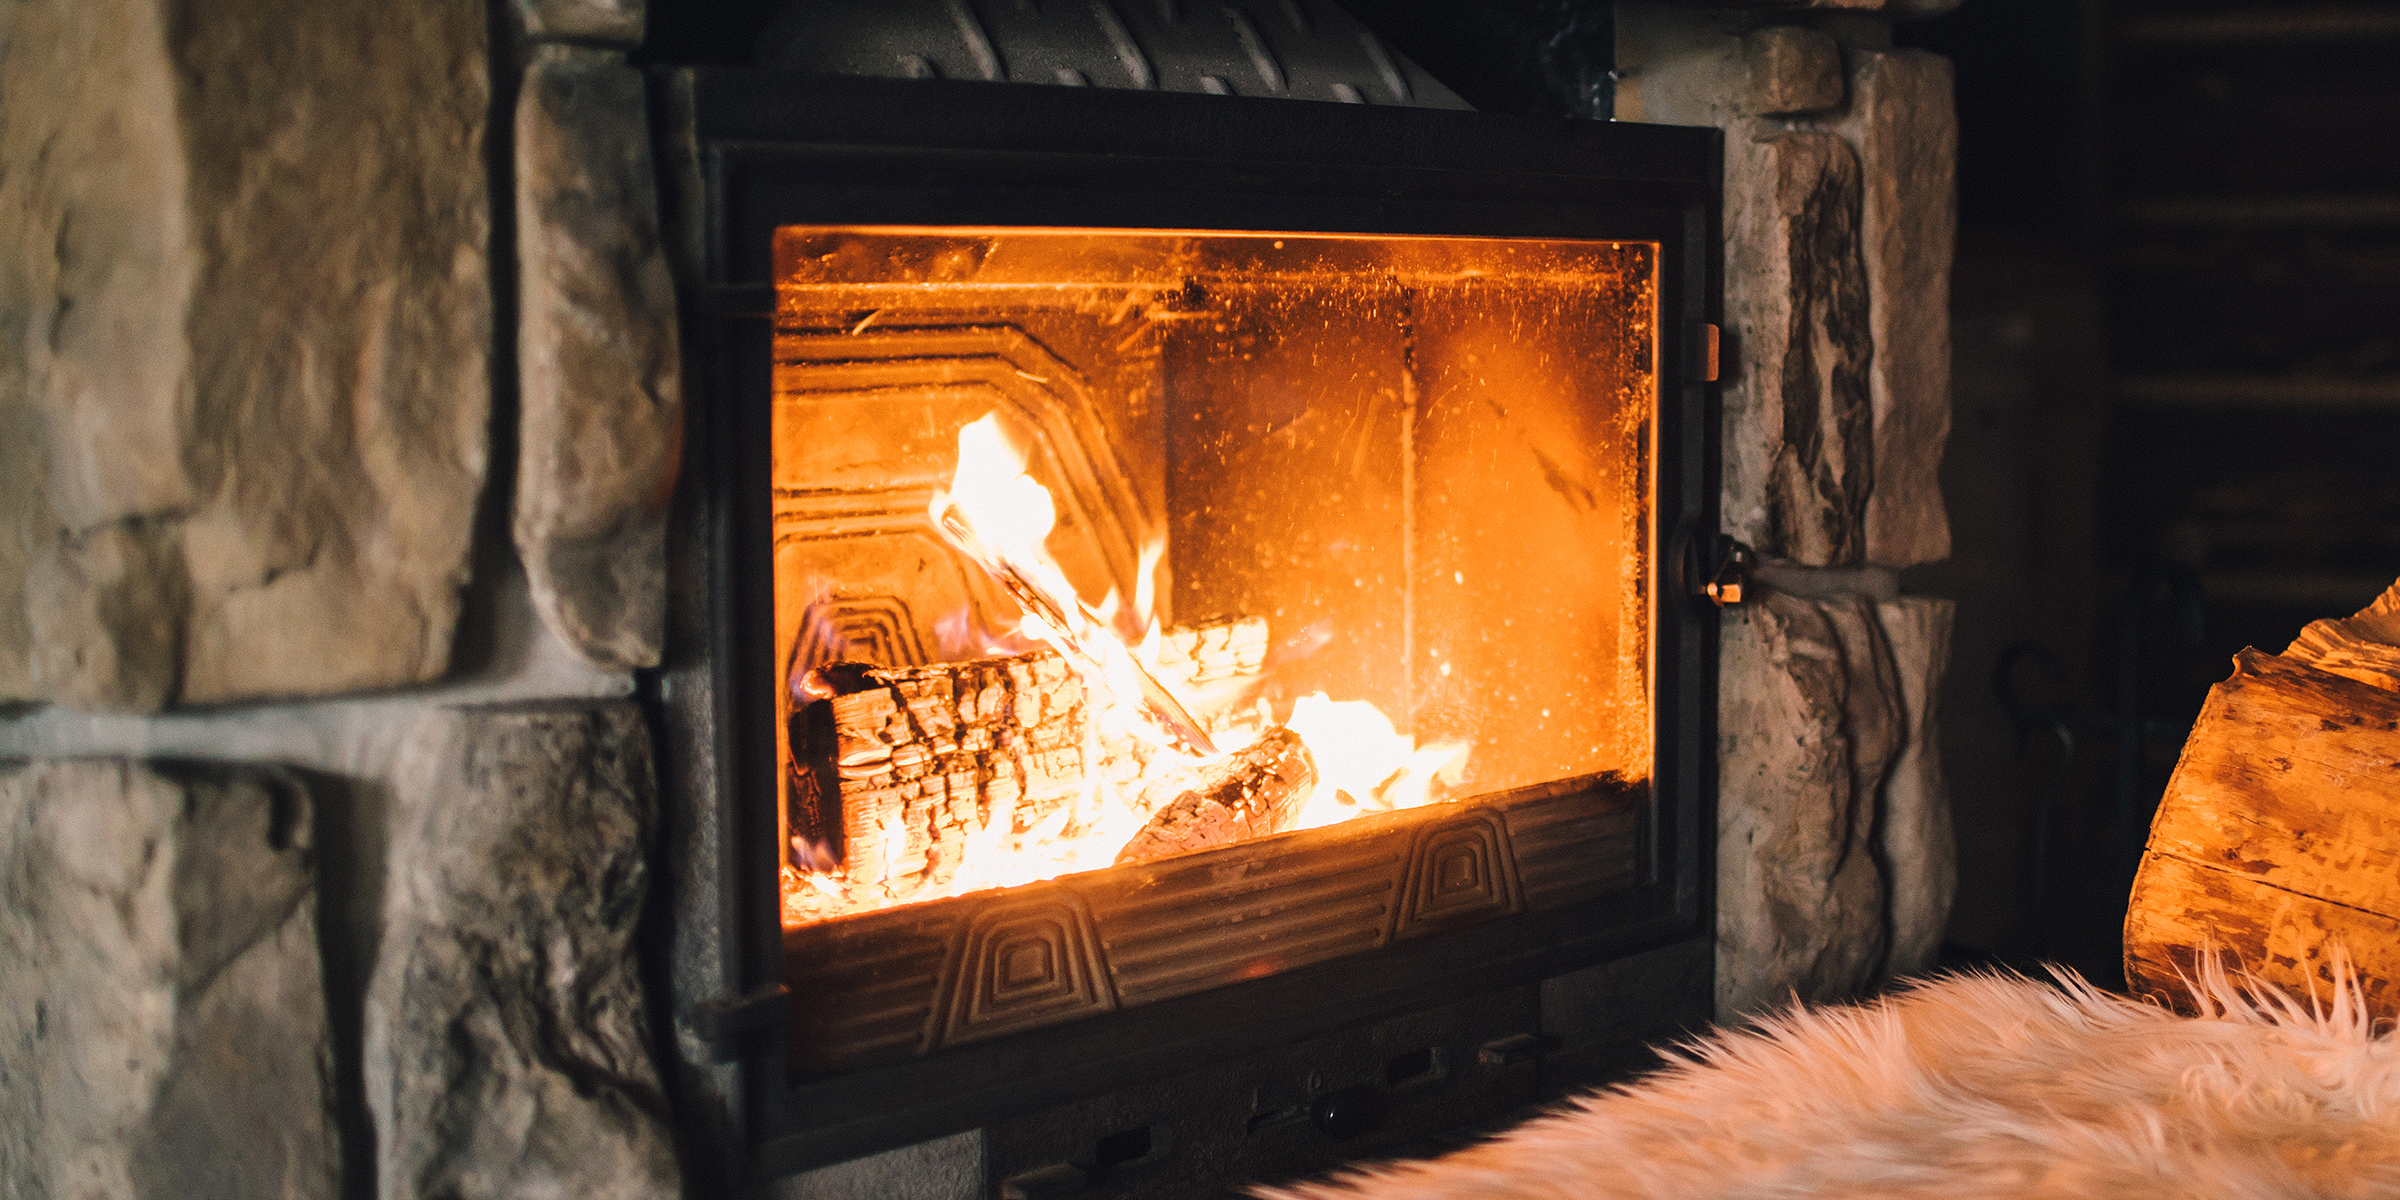 A close-up shot of a fireplace | Source: Shutterstock